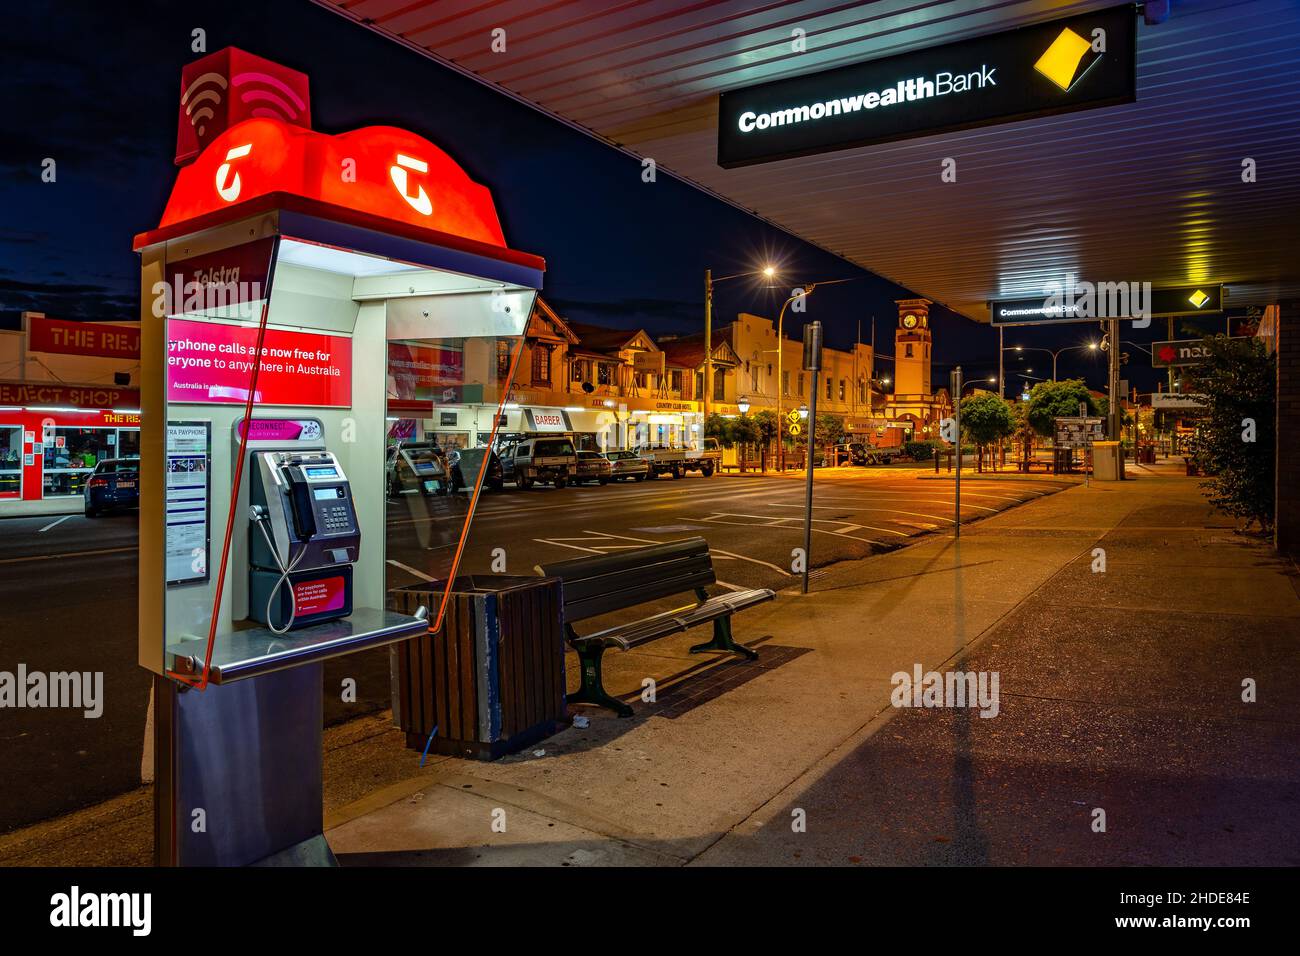 Stanthorpe, Queensland, Australia - Telstra landline phone booth illuminated at night Stock Photo